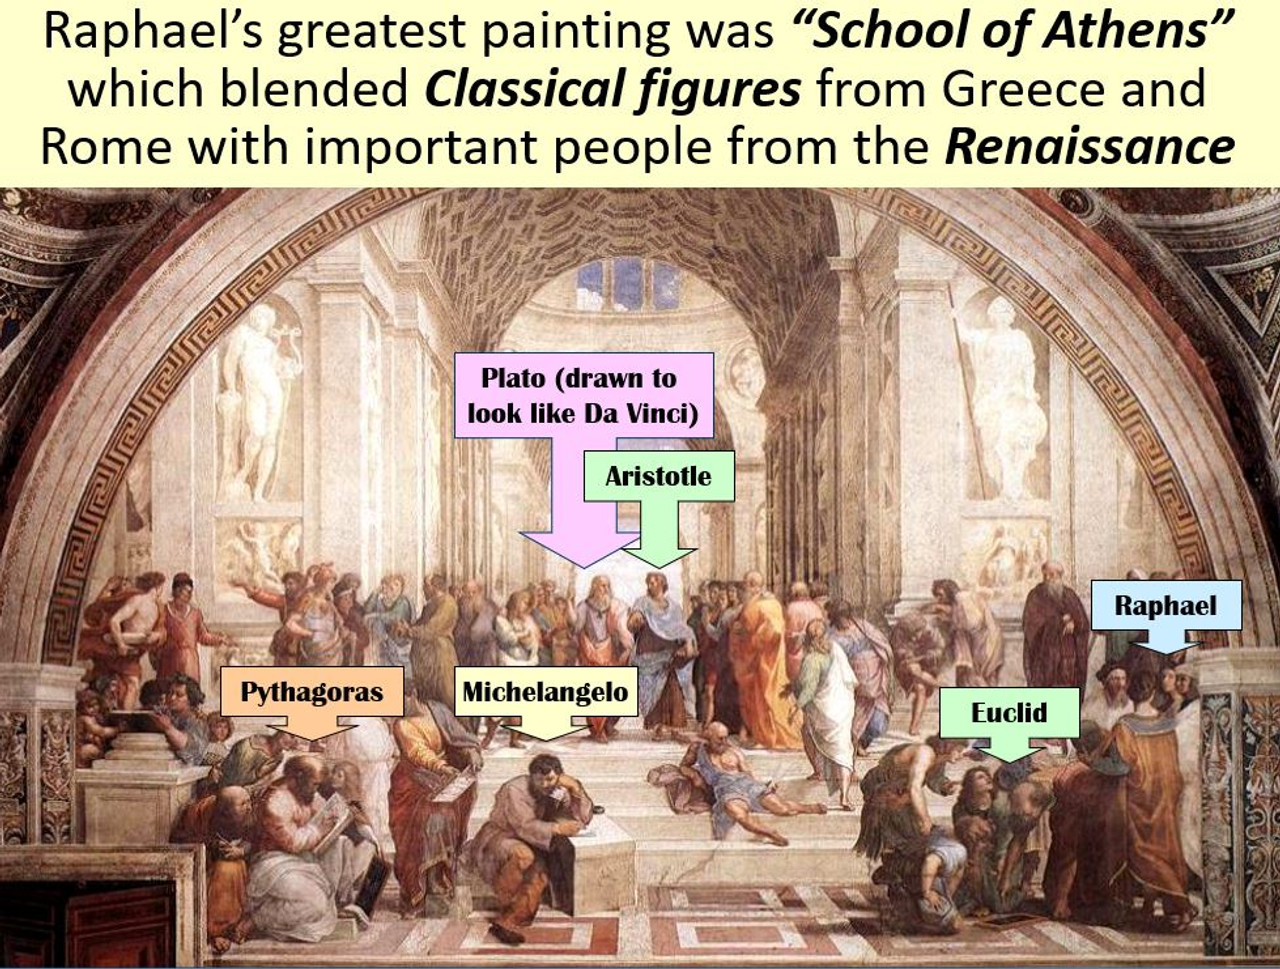 Artists of the Renaissance